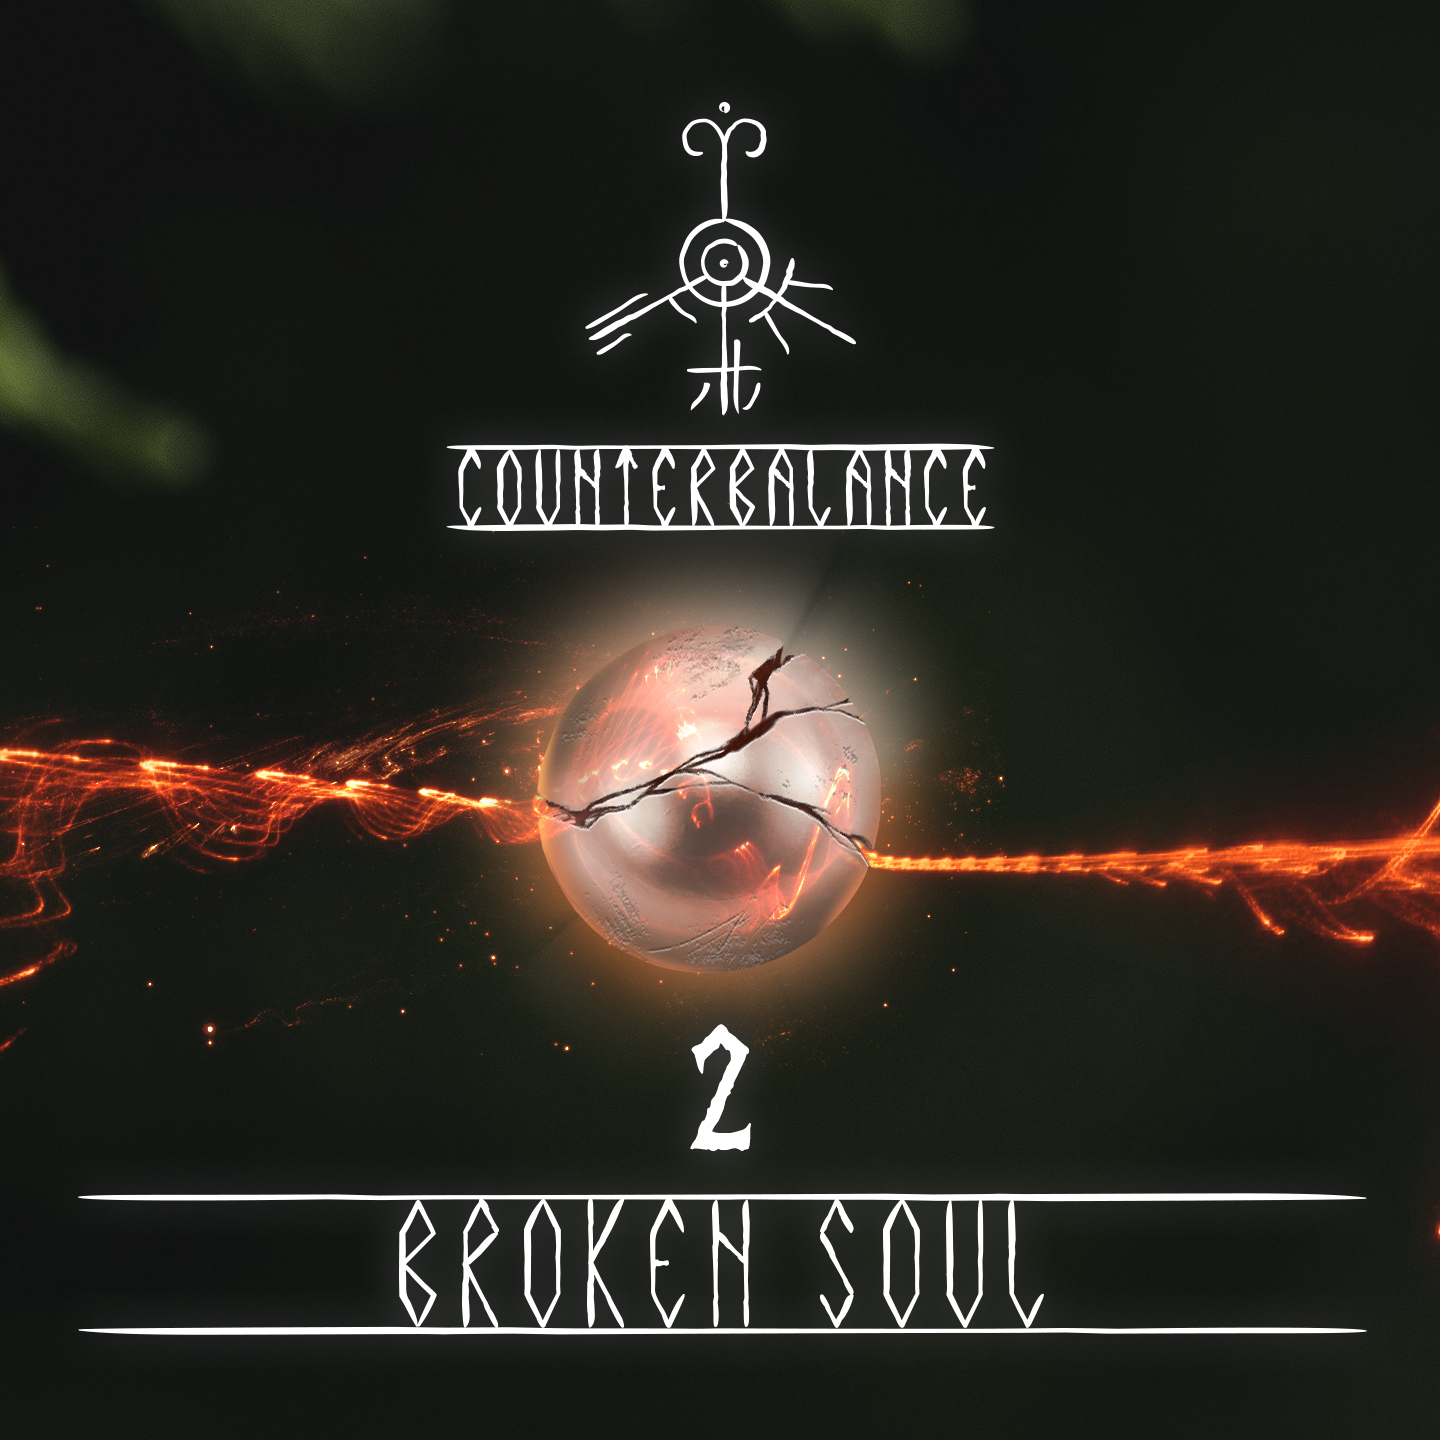 Counterbalance Cover Art Podcast Episode 02 Artwork Broken Soul